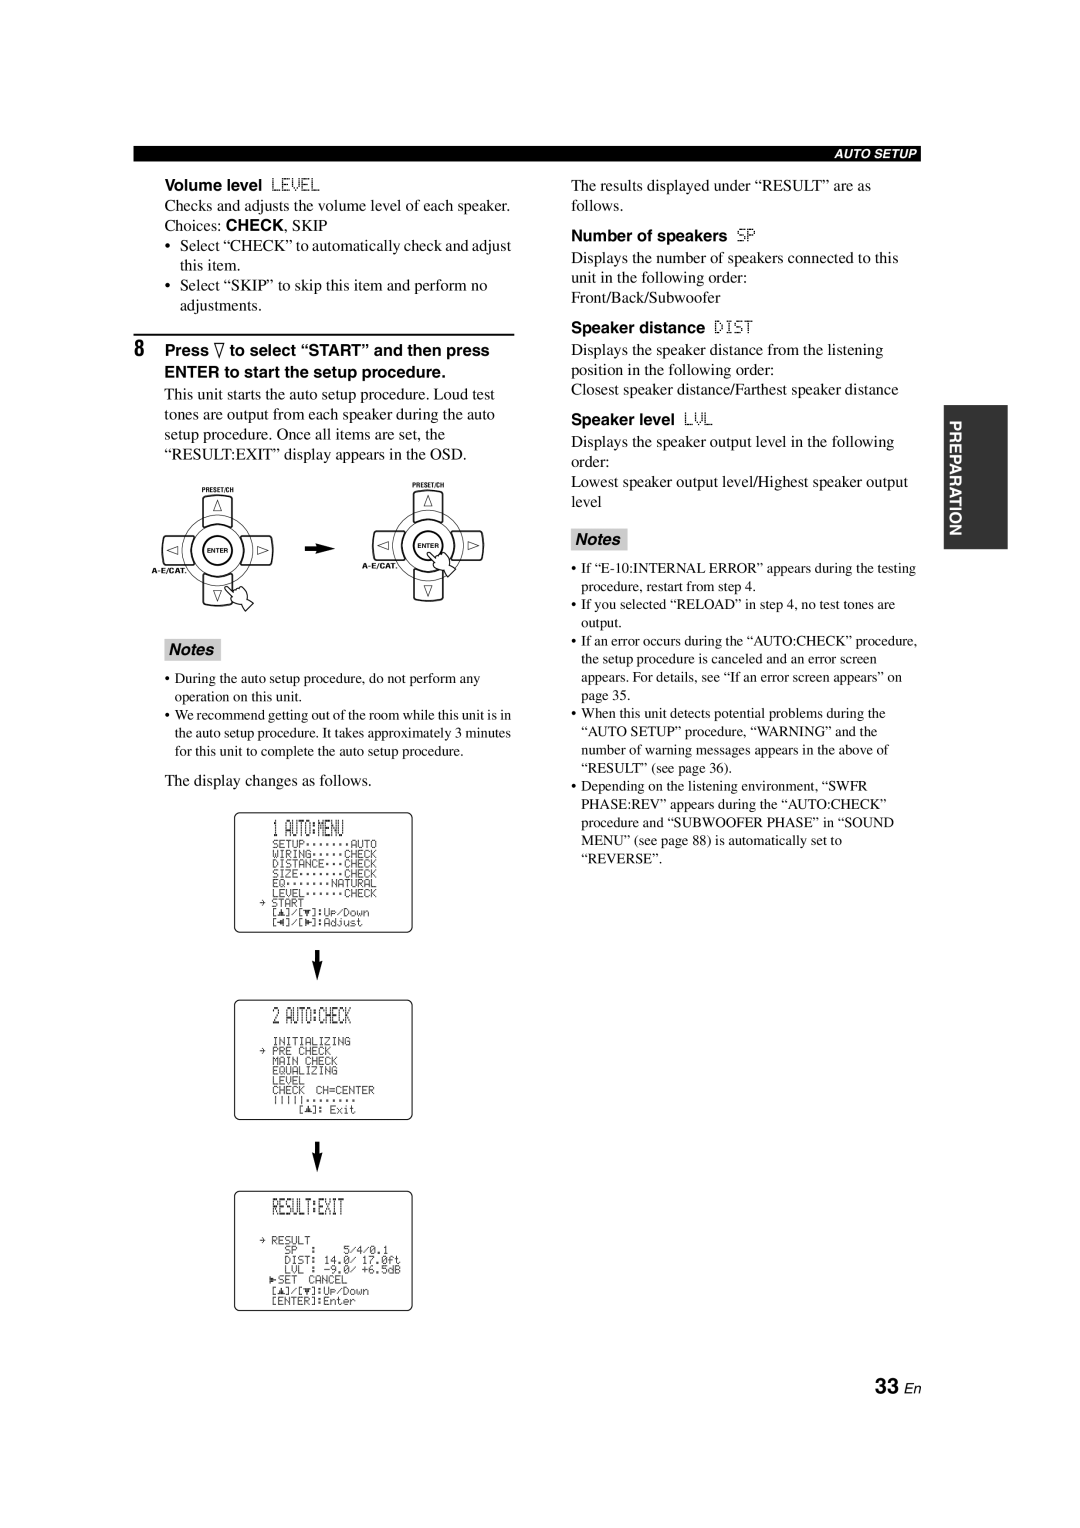 Yamaha HTR-6090 owner manual Auto:Check, Result:Exit, 33 En, Auto:Menu, Notes 